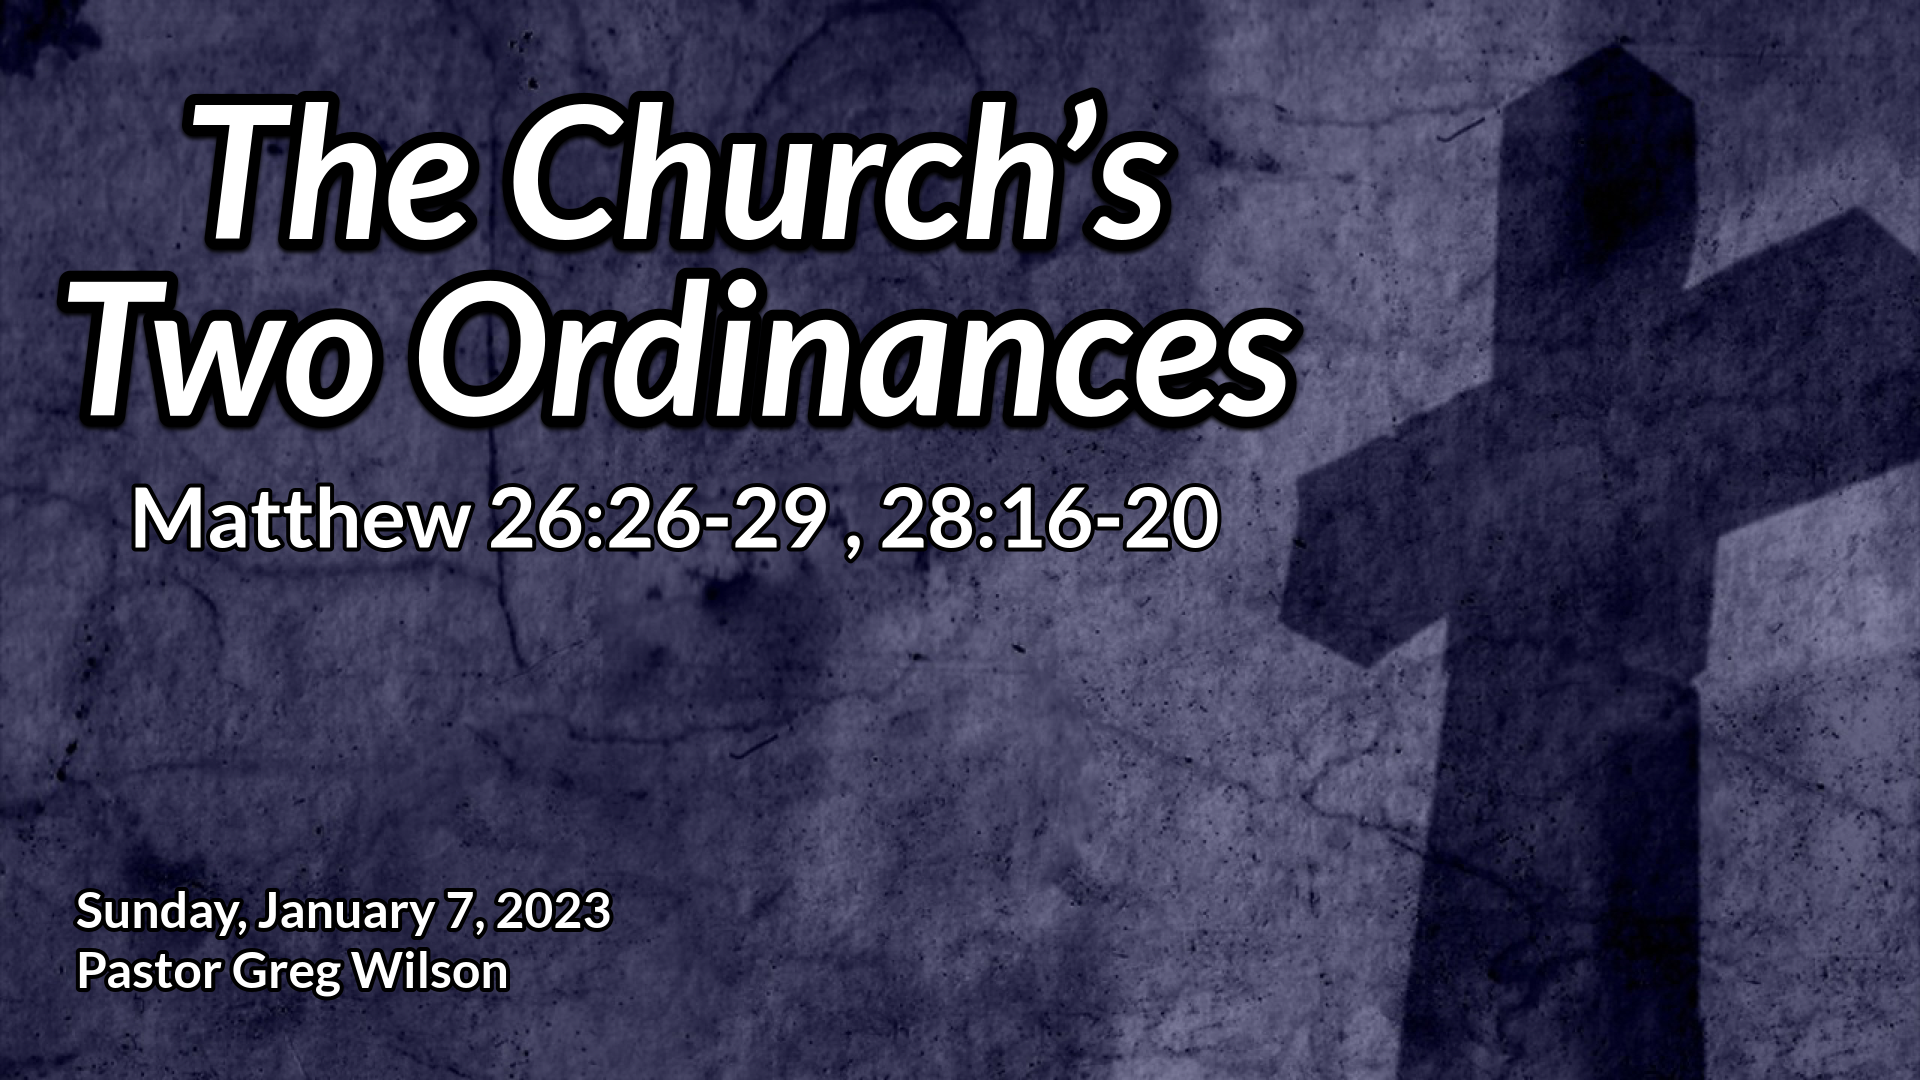 "The Church’s Two Ordinances"